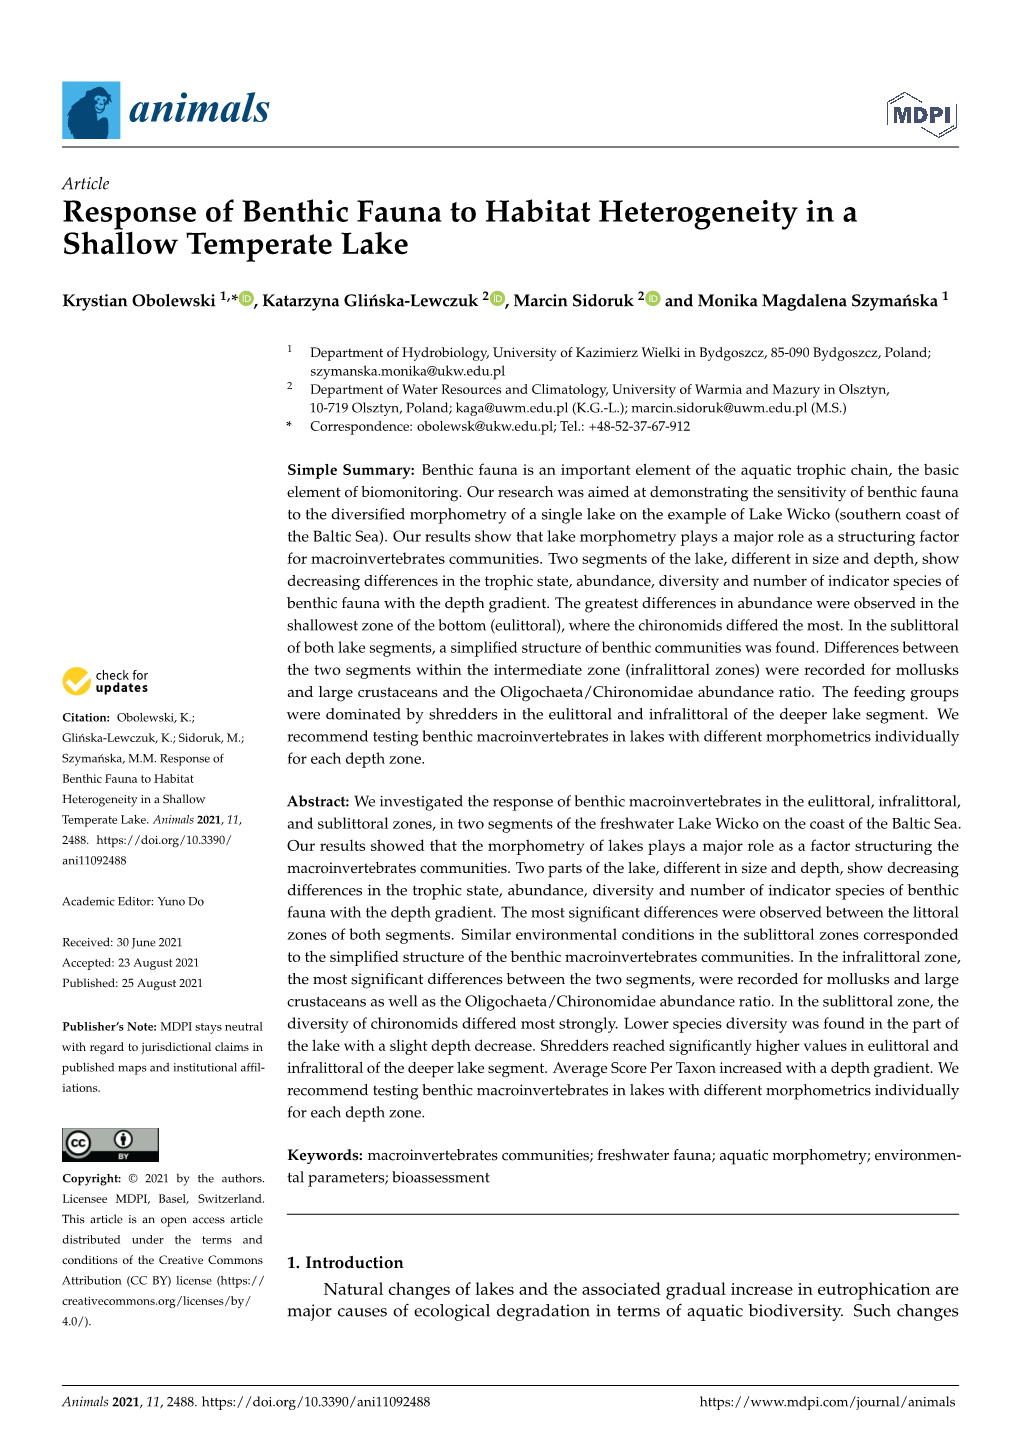 Response of Benthic Fauna to Habitat Heterogeneity in a Shallow Temperate Lake